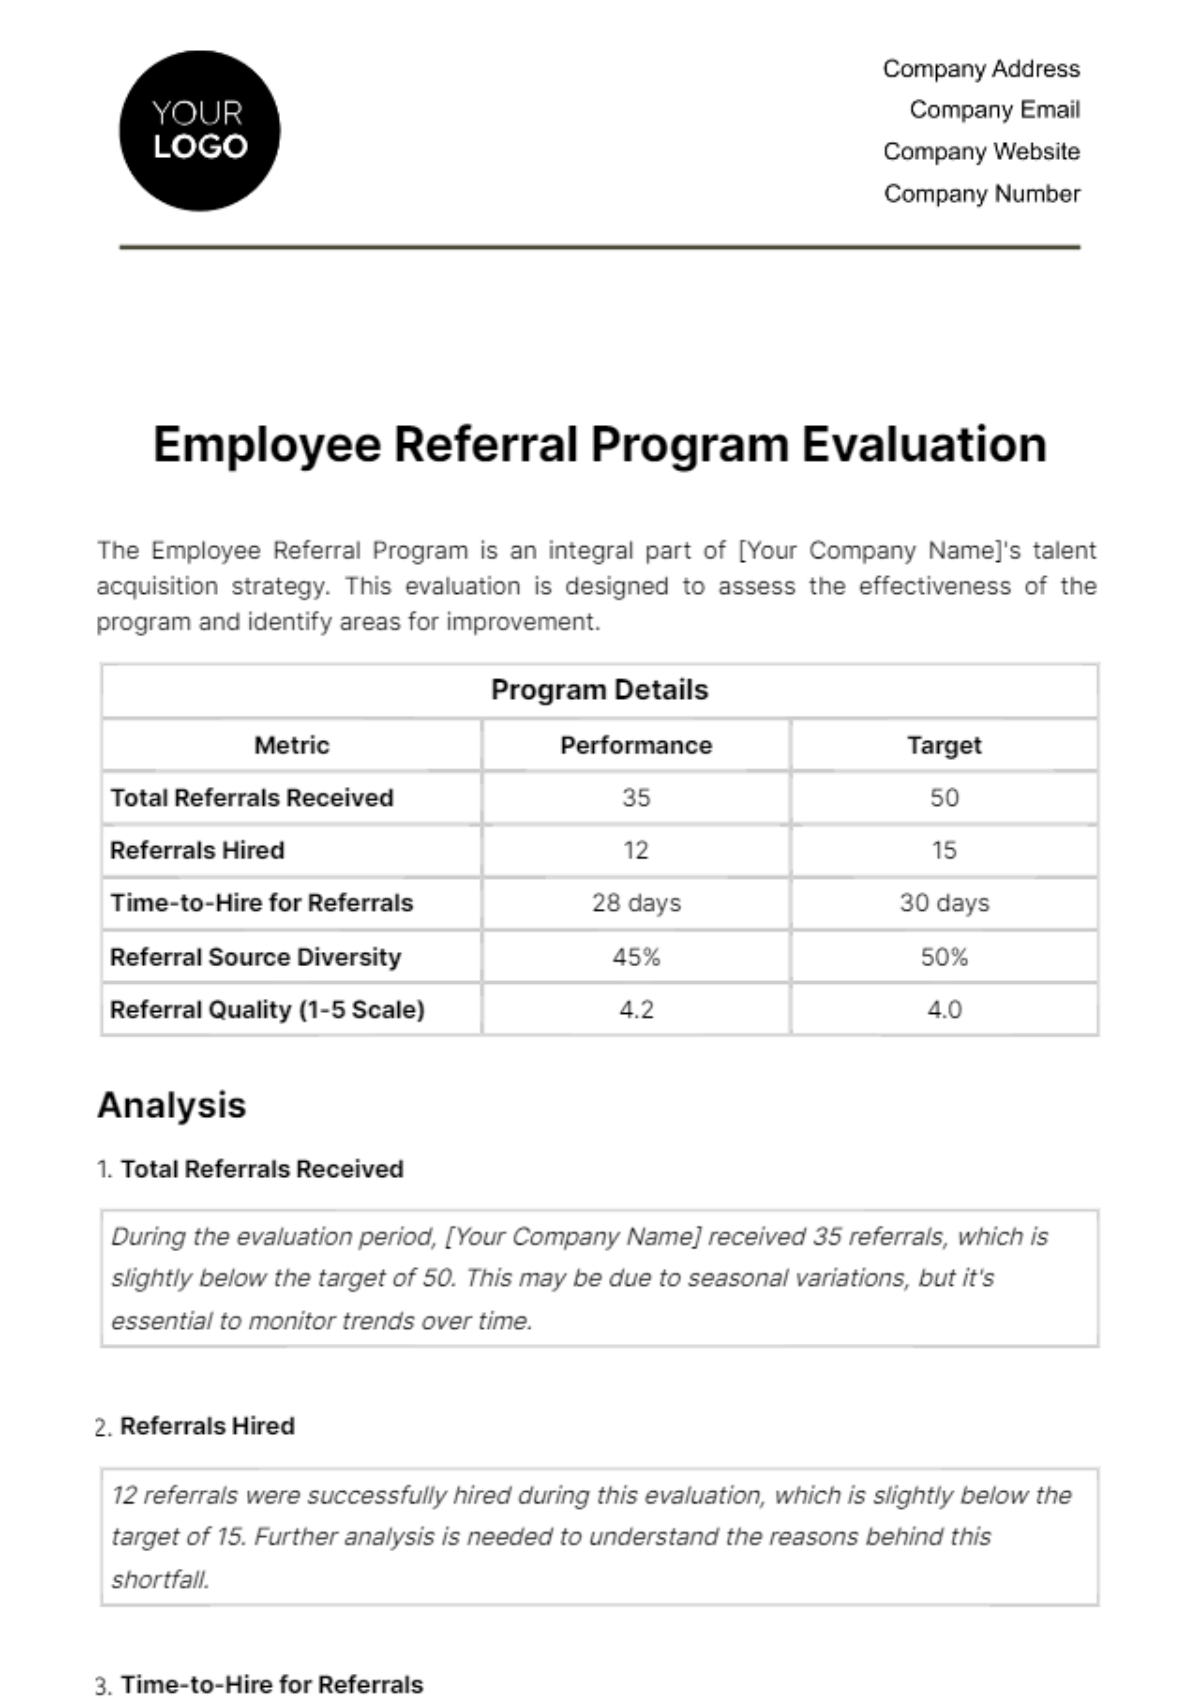 Free Employee Referral Program Evaluation HR Template